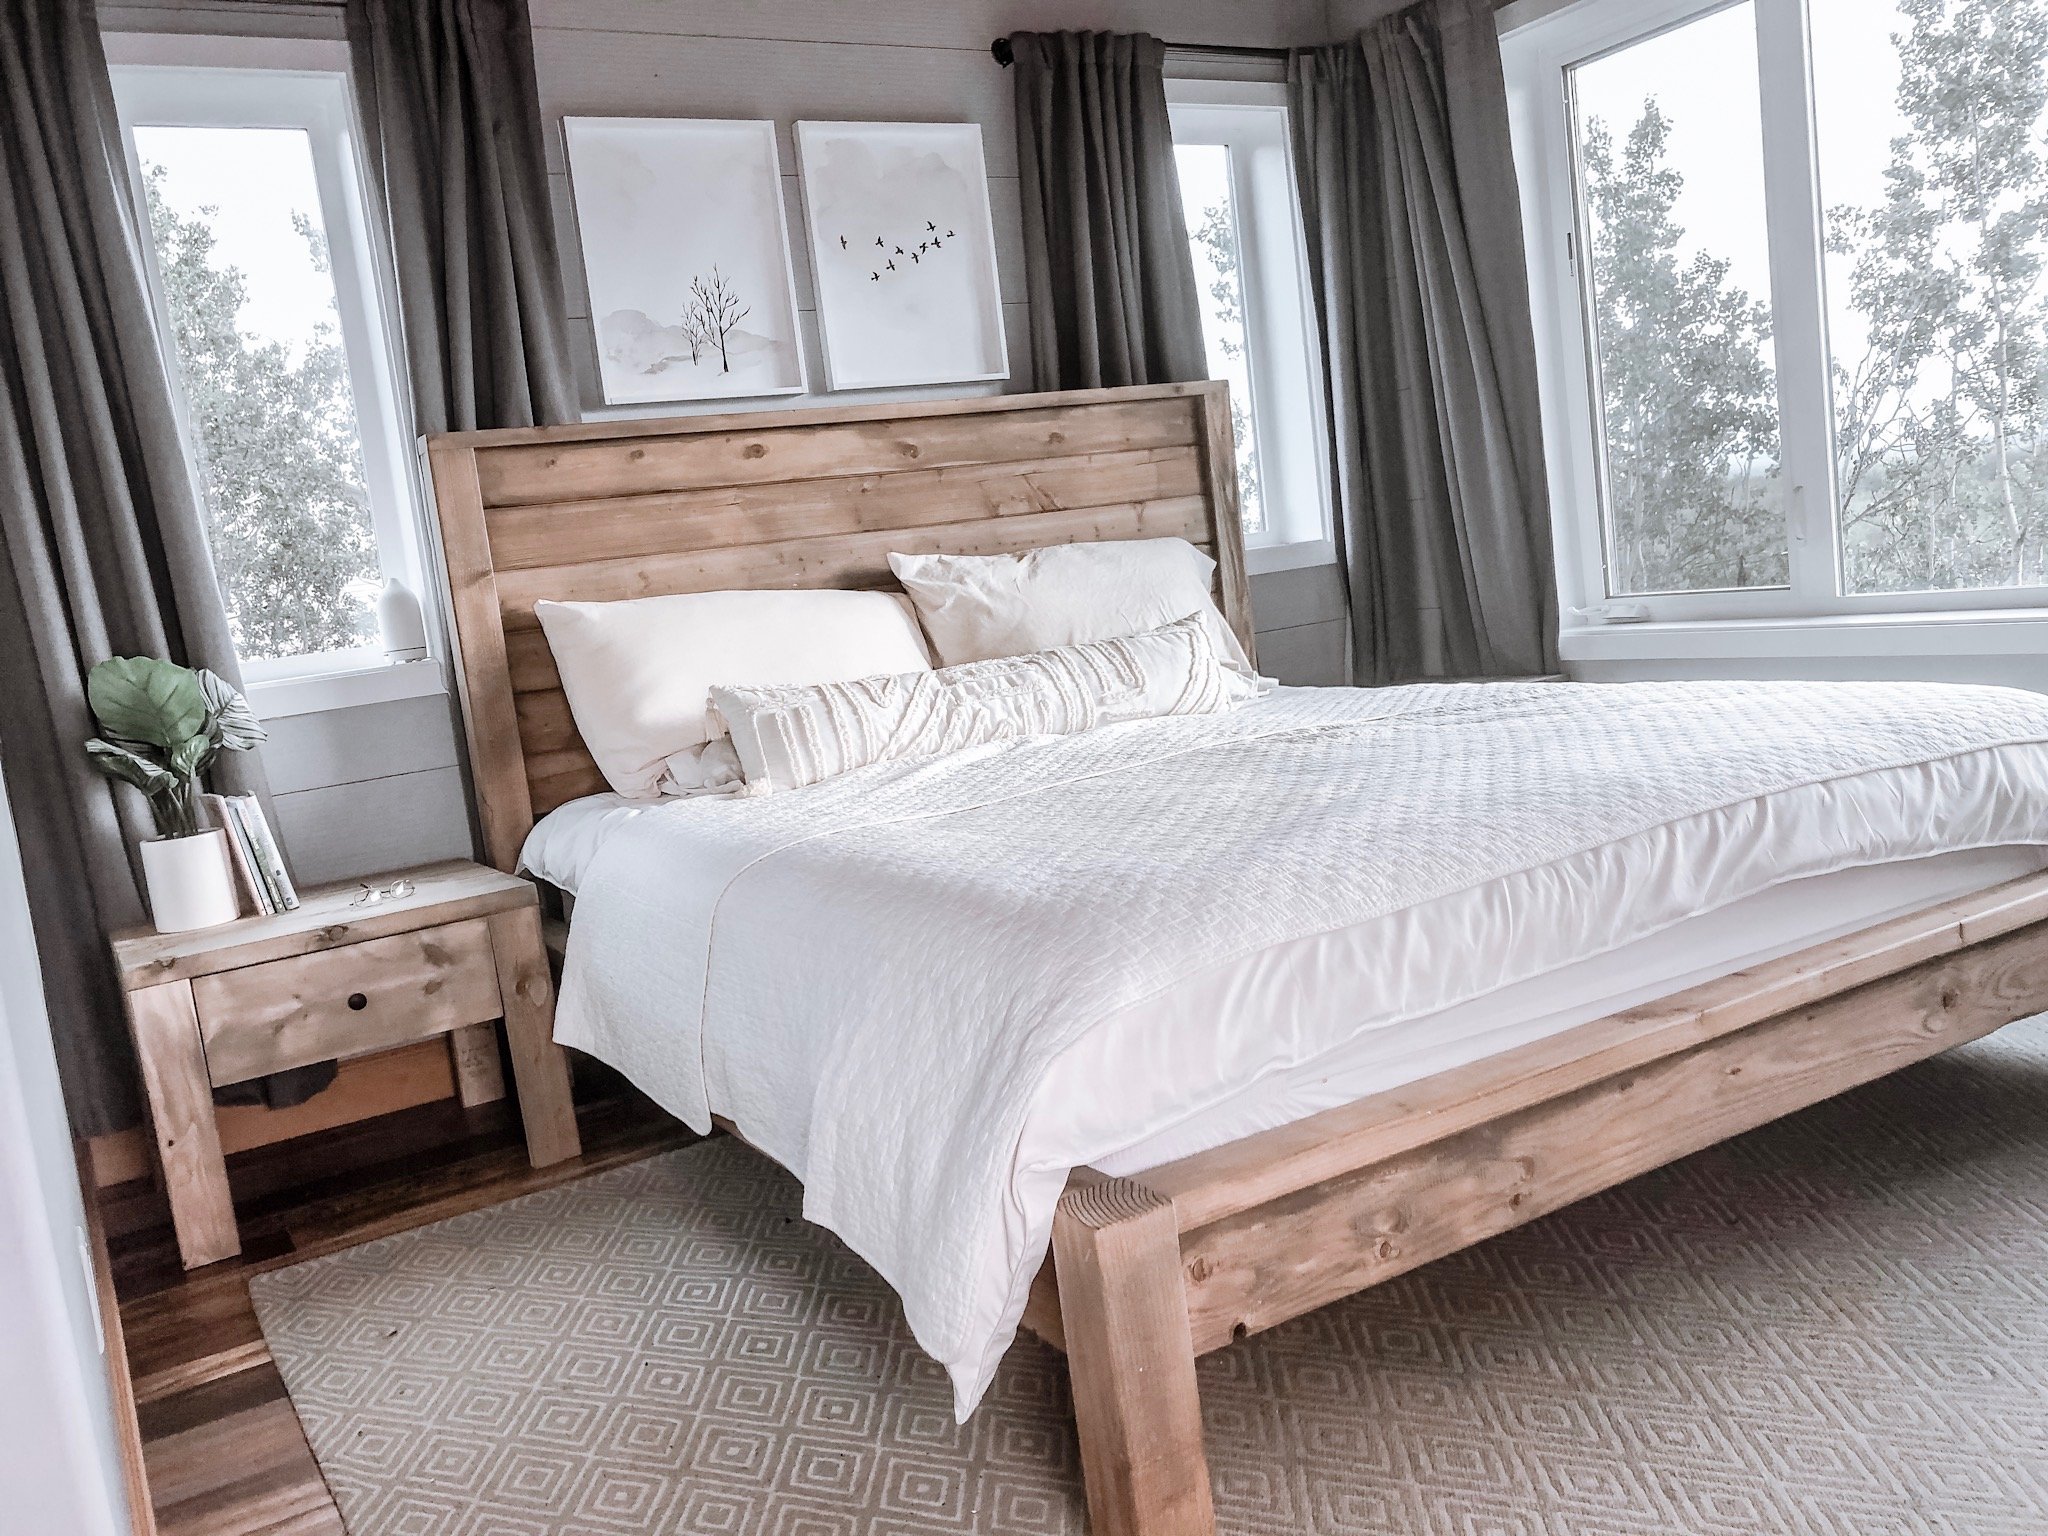 Modern Farmhouse Bed Frame Ana White, Simple Modern Diy Bed Frame